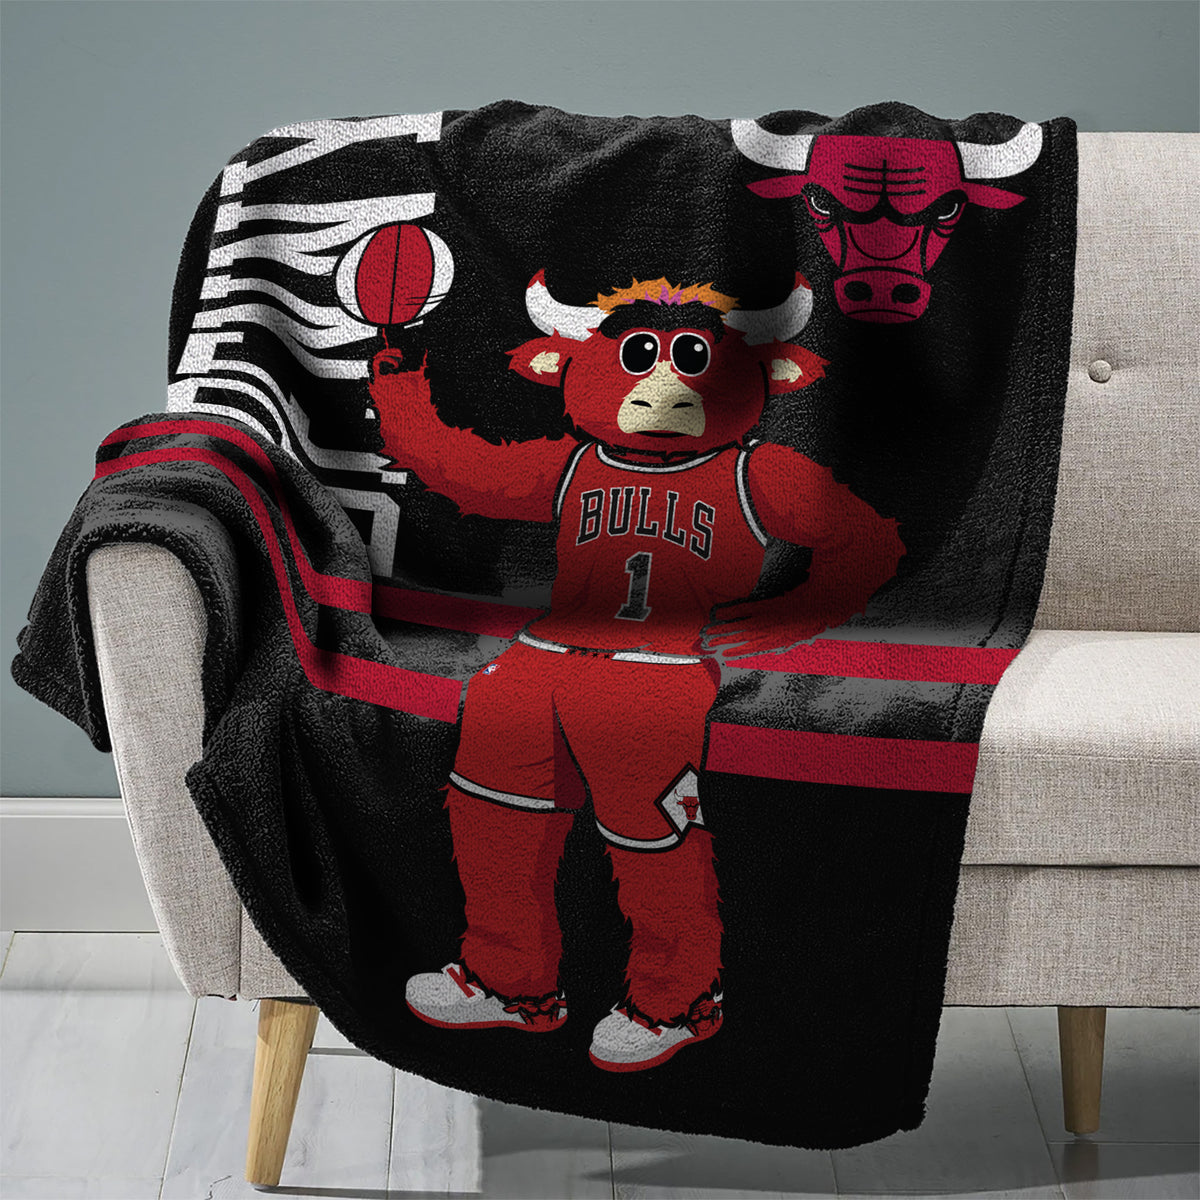 Chicago Bulls Benny the Bull Mascot 60” x 80” Plush Blanket